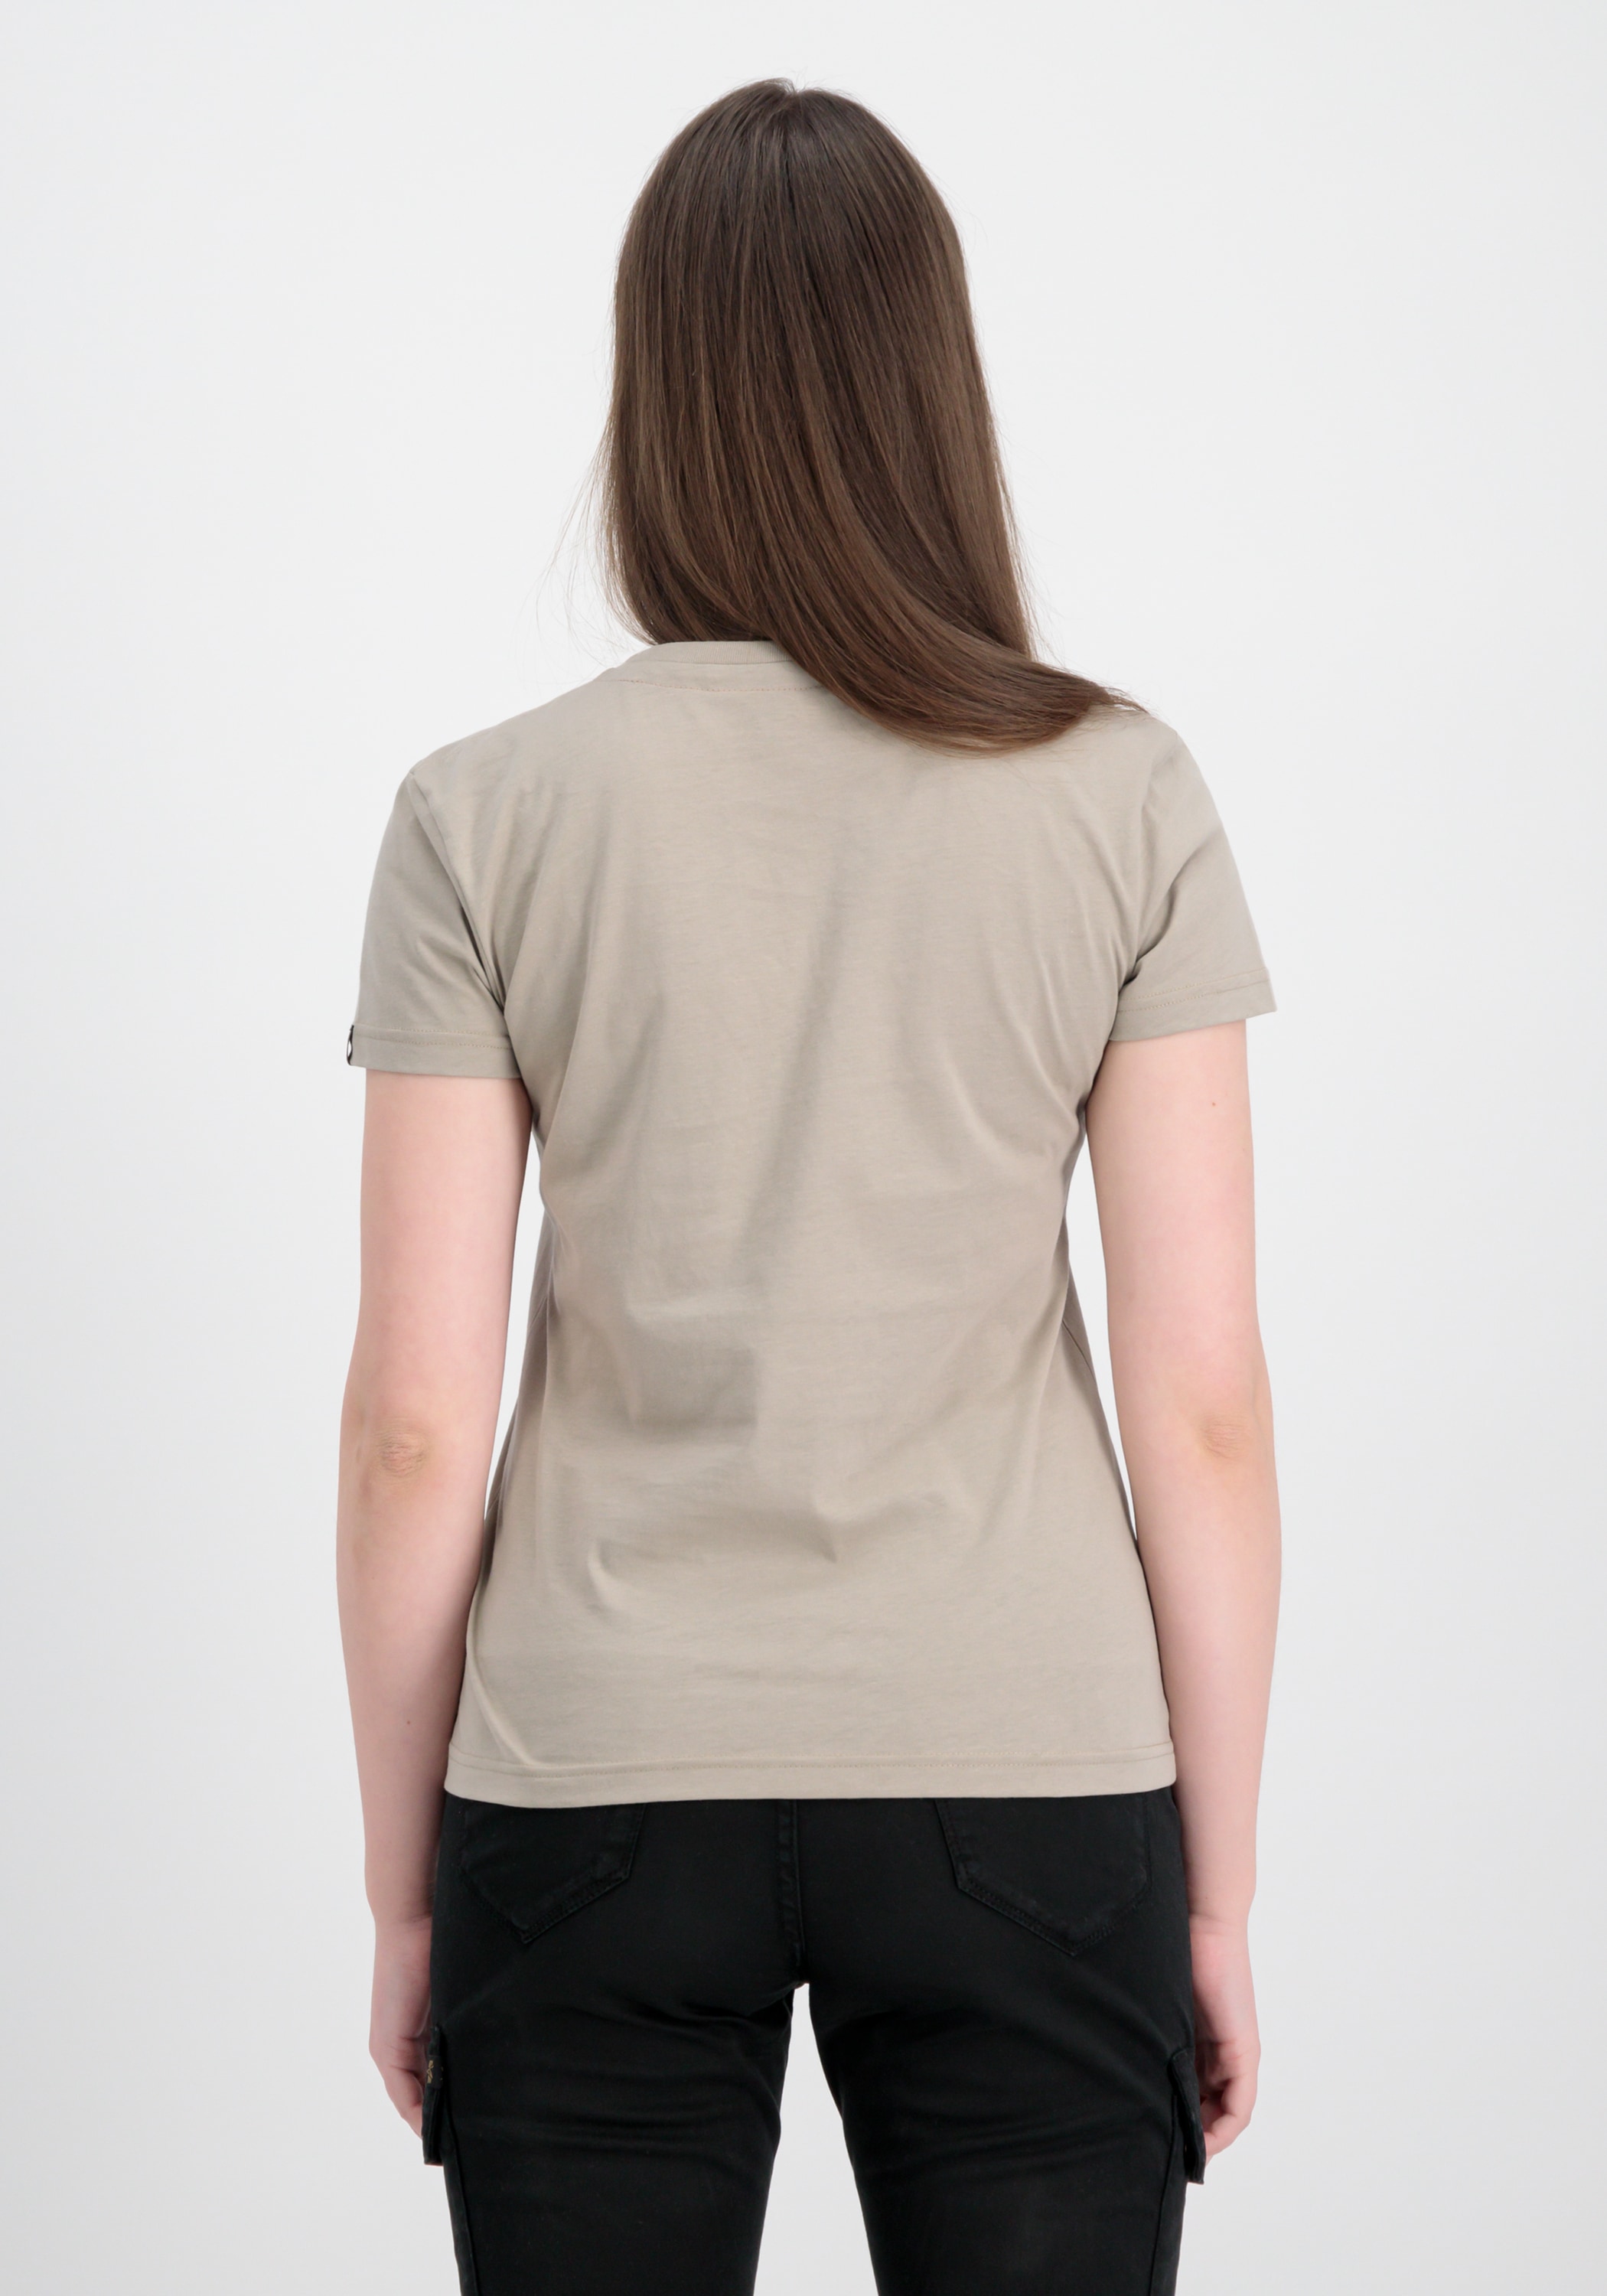 »Alpha Women T-Shirts Basic ♕ versandkostenfrei Alpha T kaufen - Industries New T-Shirt Industries Wmn«